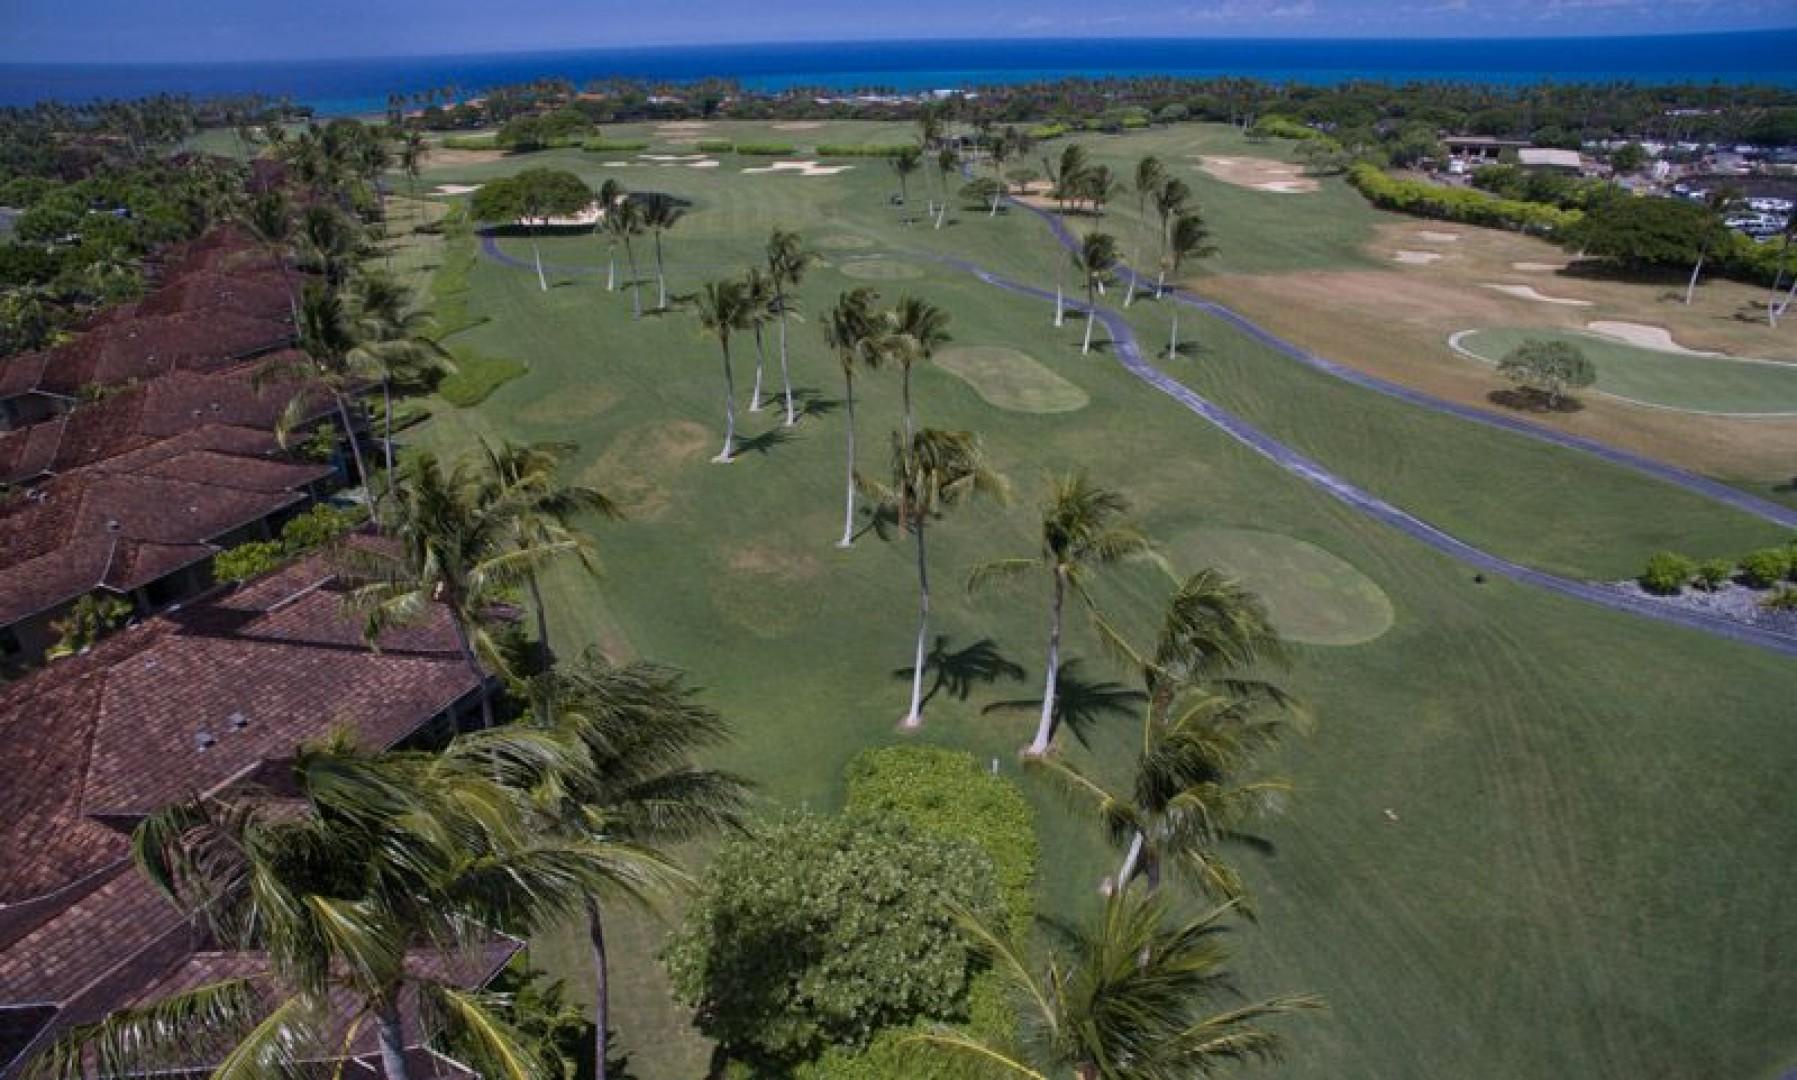 Kailua Kona Vacation Rentals, Fairways Villa 120A - World renowned golfing!